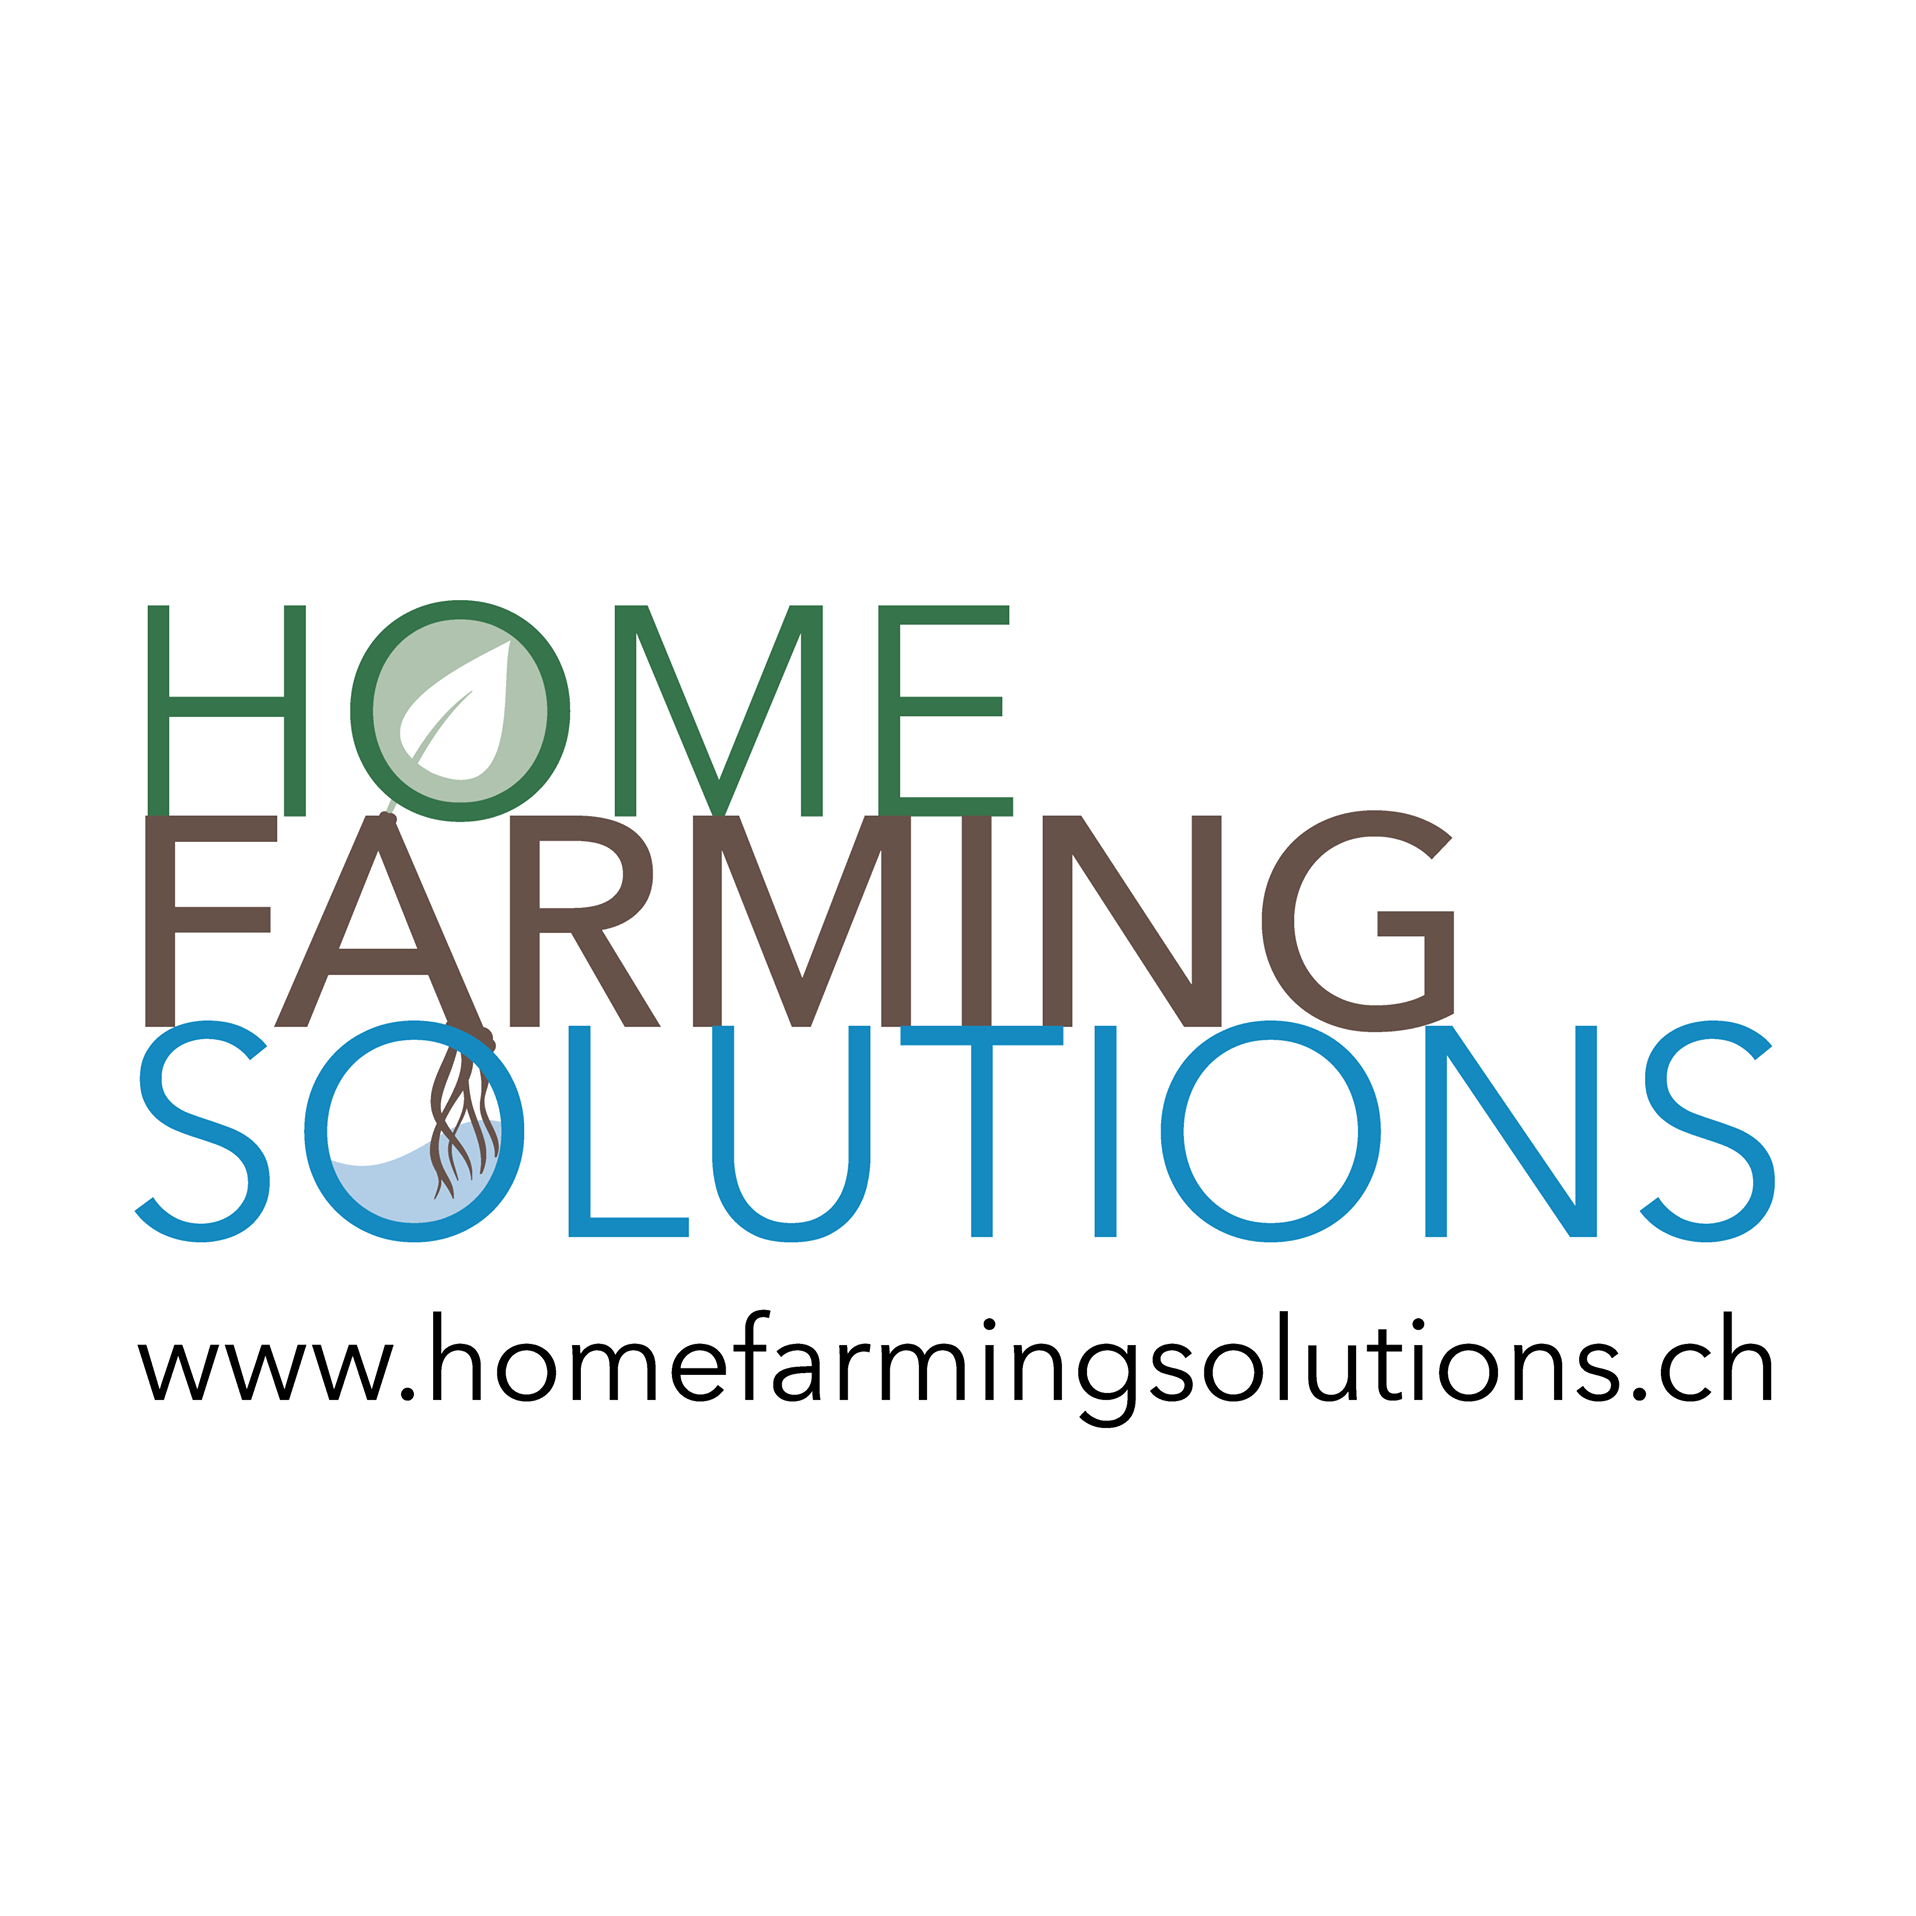 Home Farming Solutions